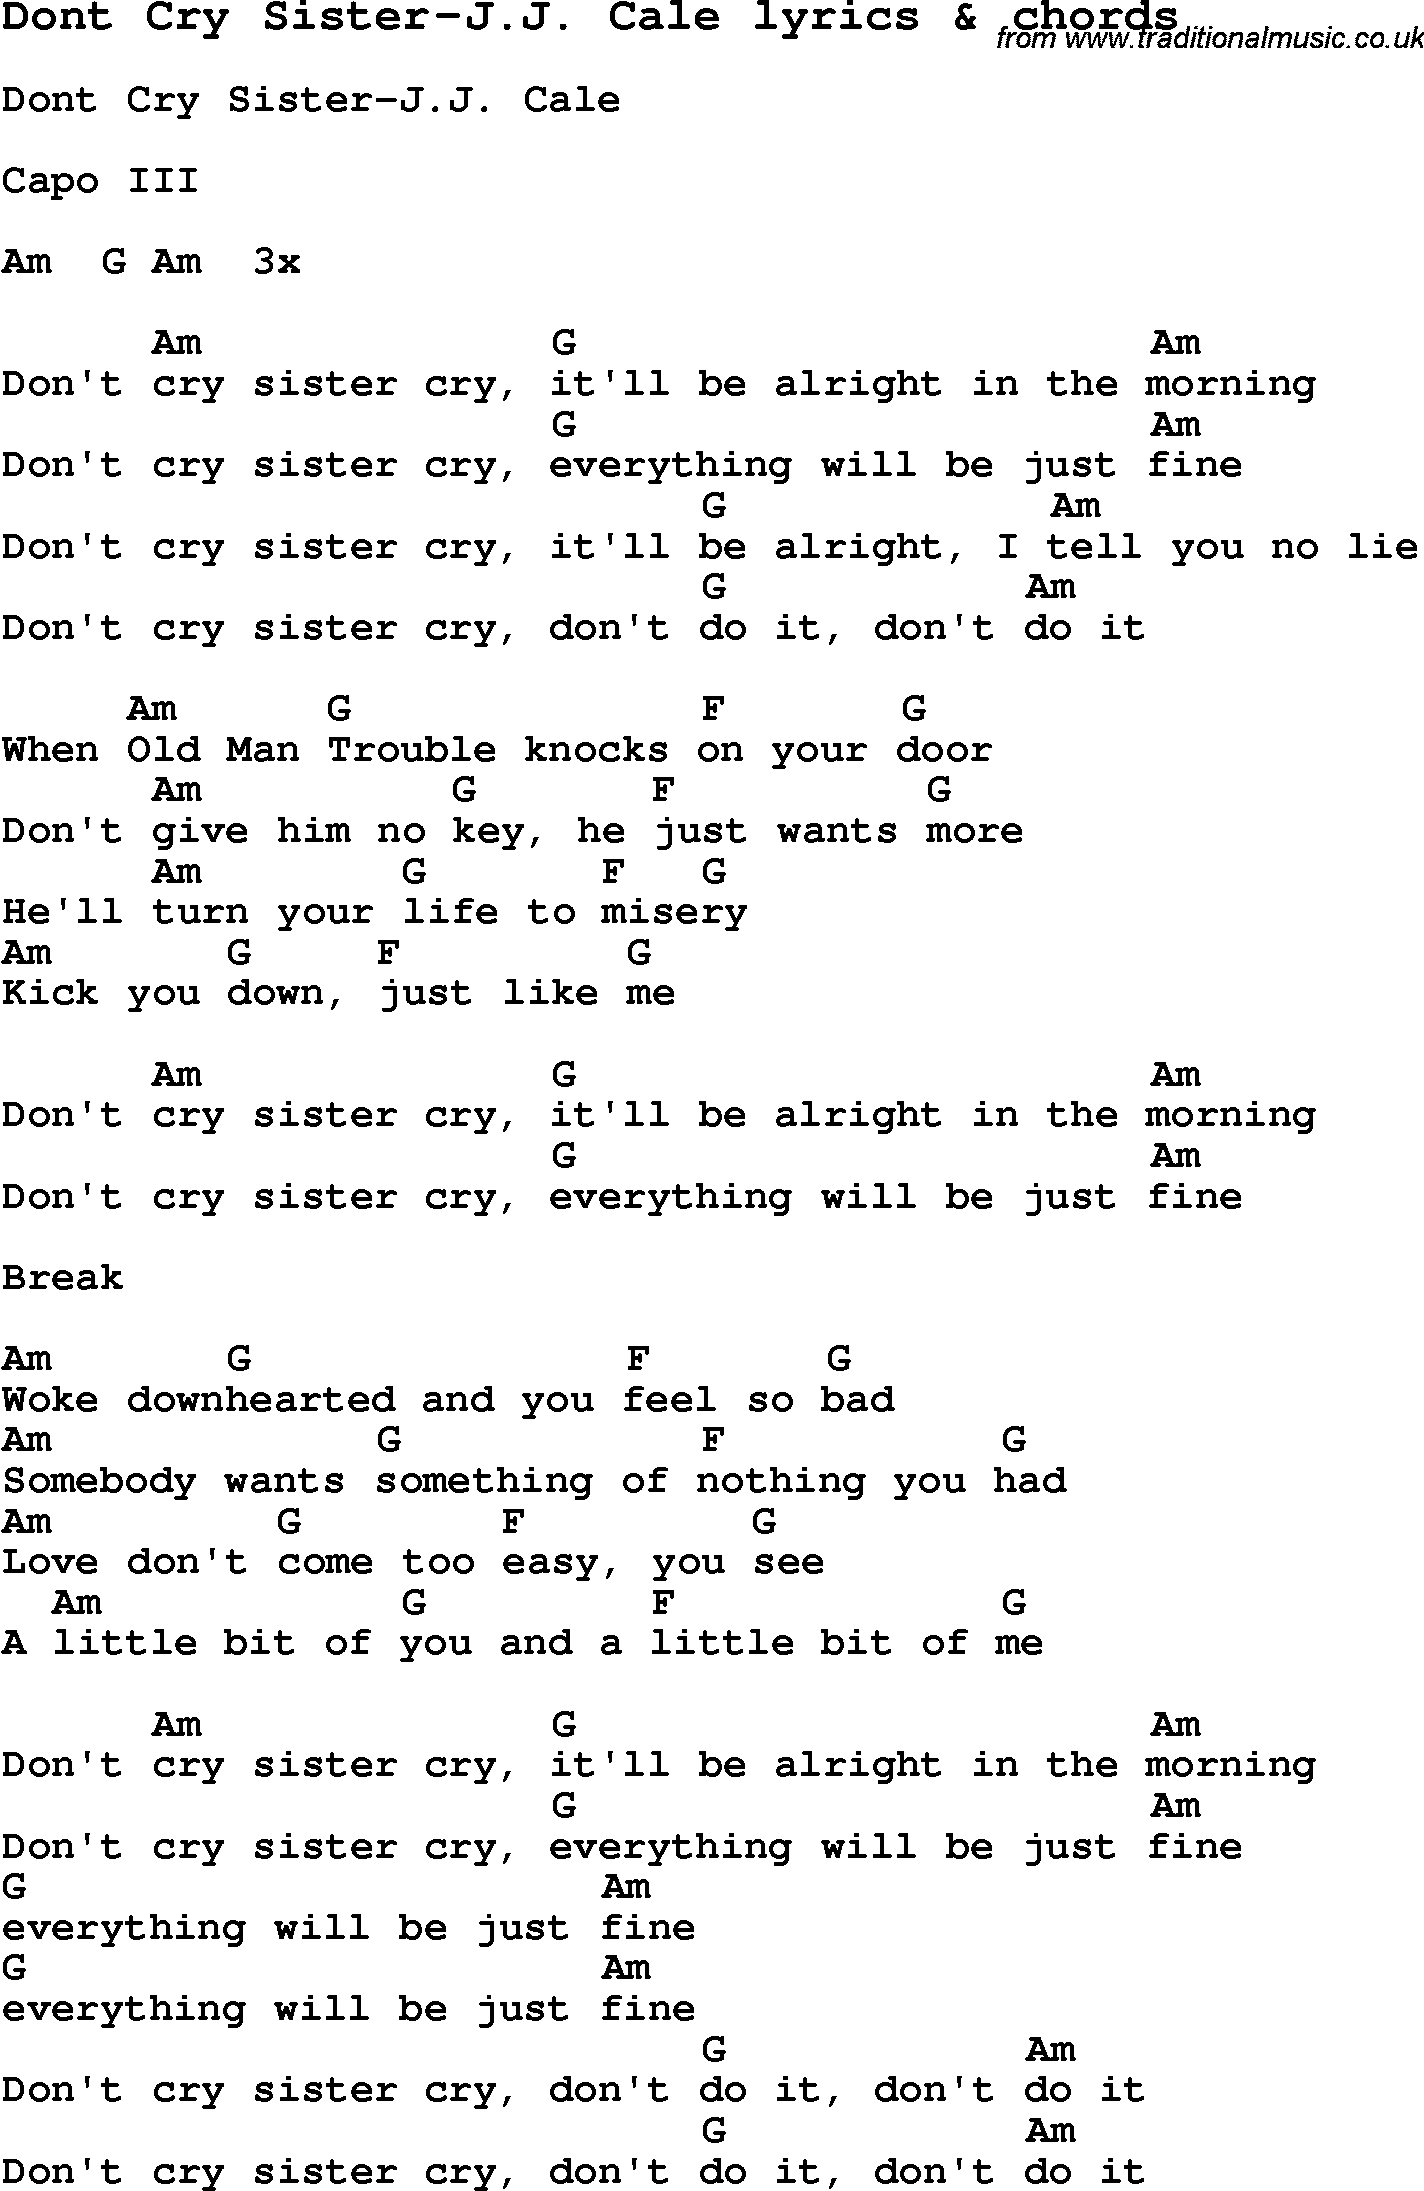 Love Song Lyrics for: Dont Cry Sister-J.J. Cale with chords for Ukulele, Guitar Banjo etc.